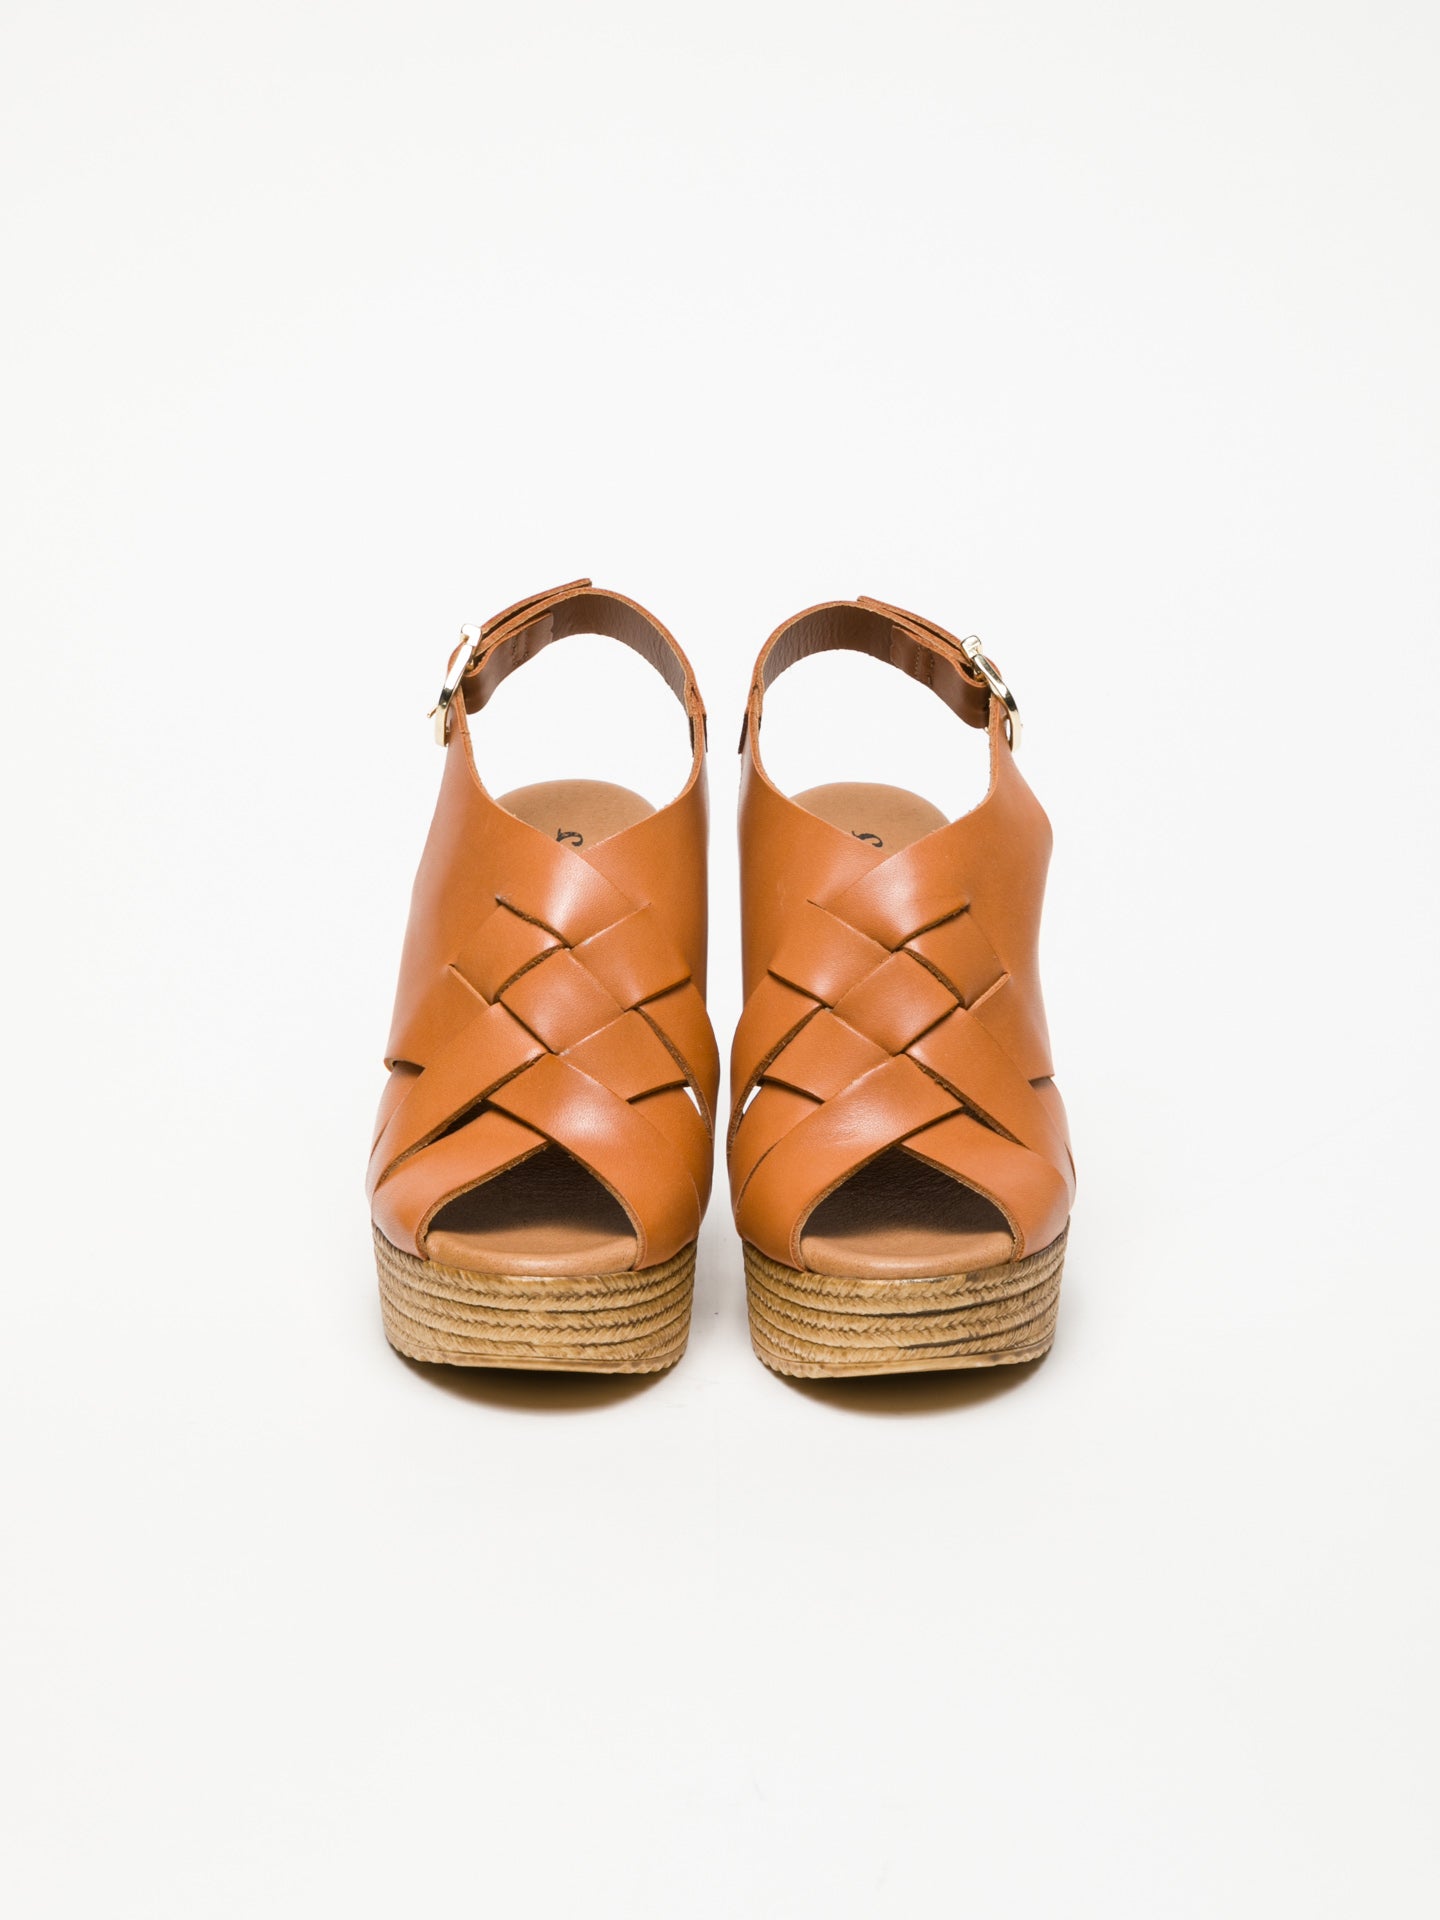 Clay's Peru Buckle Sandals